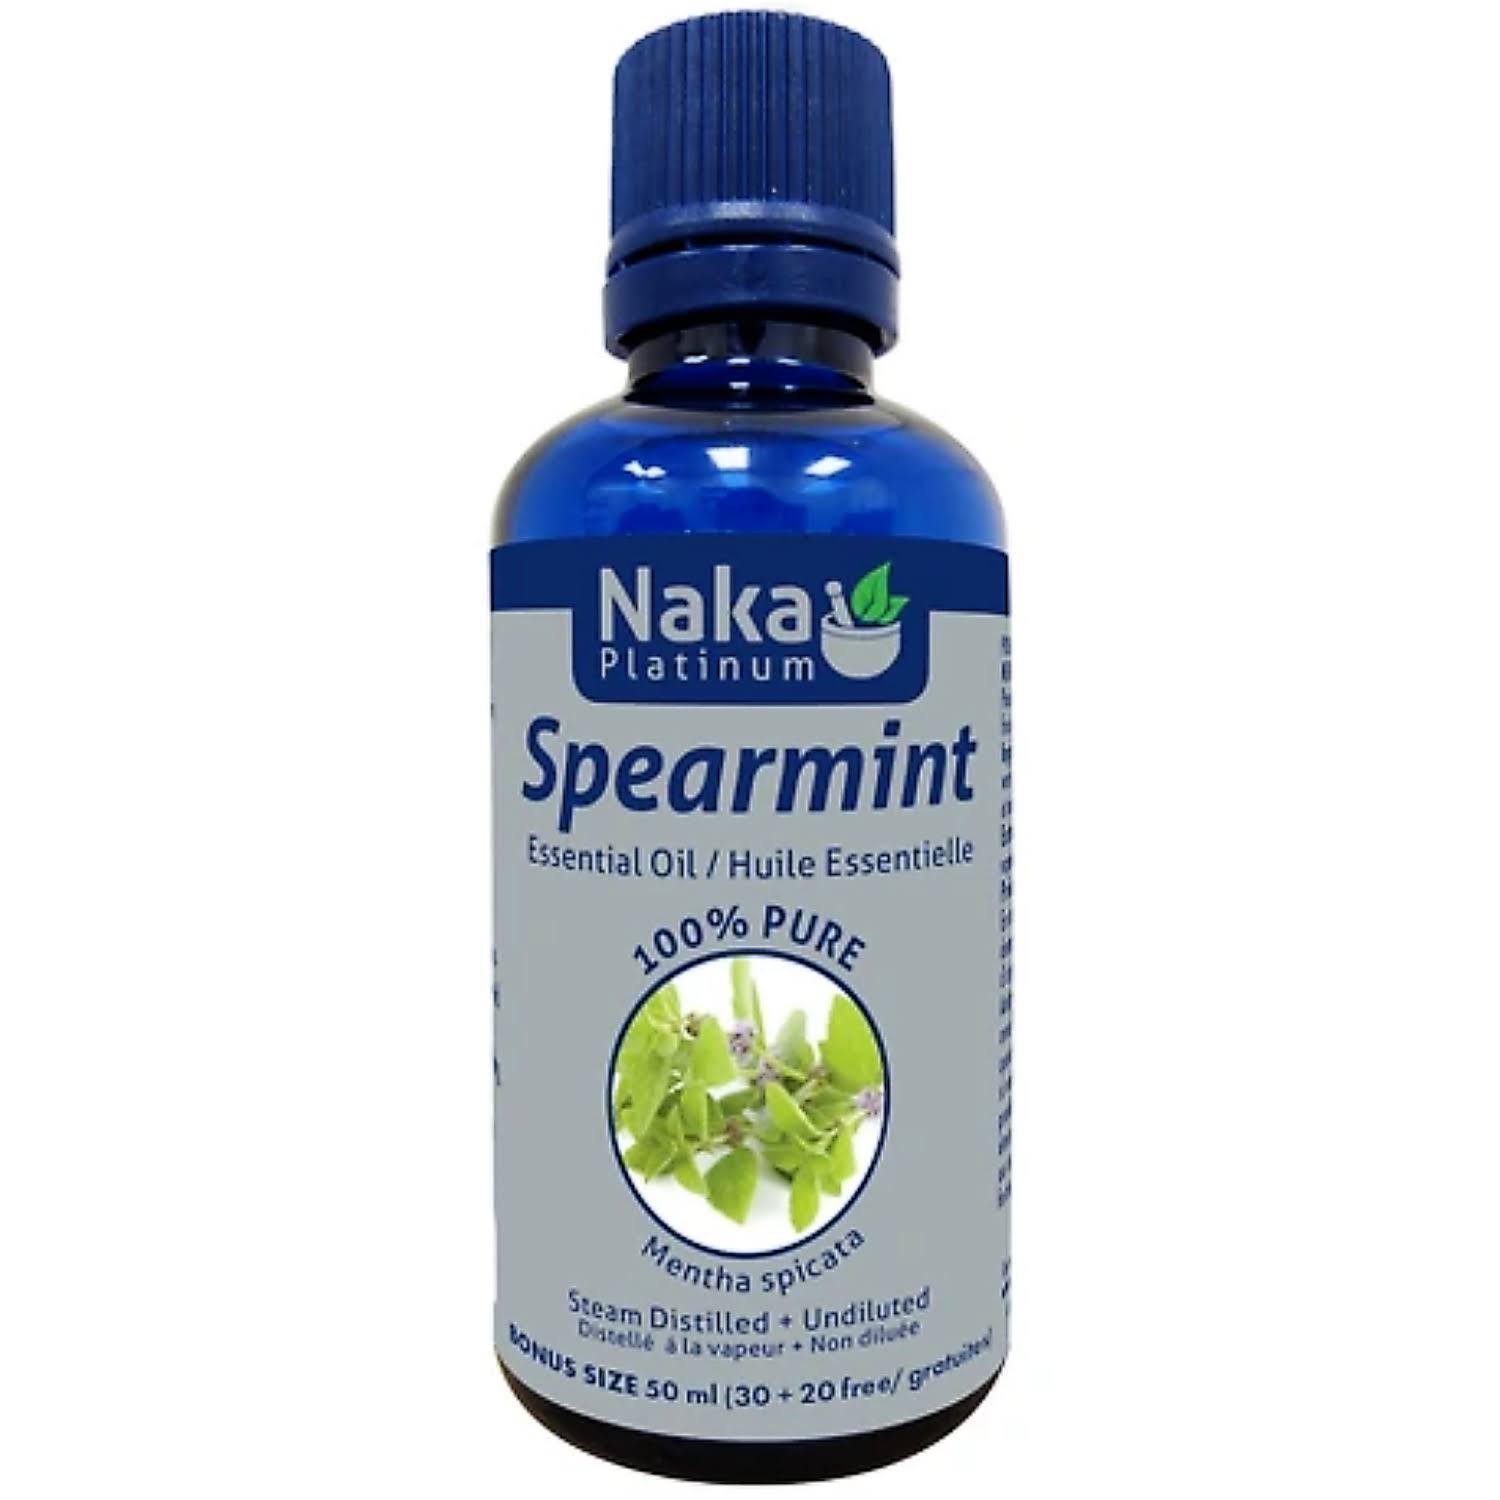 Naka Platinum Spearmint Essential Oil 50ml